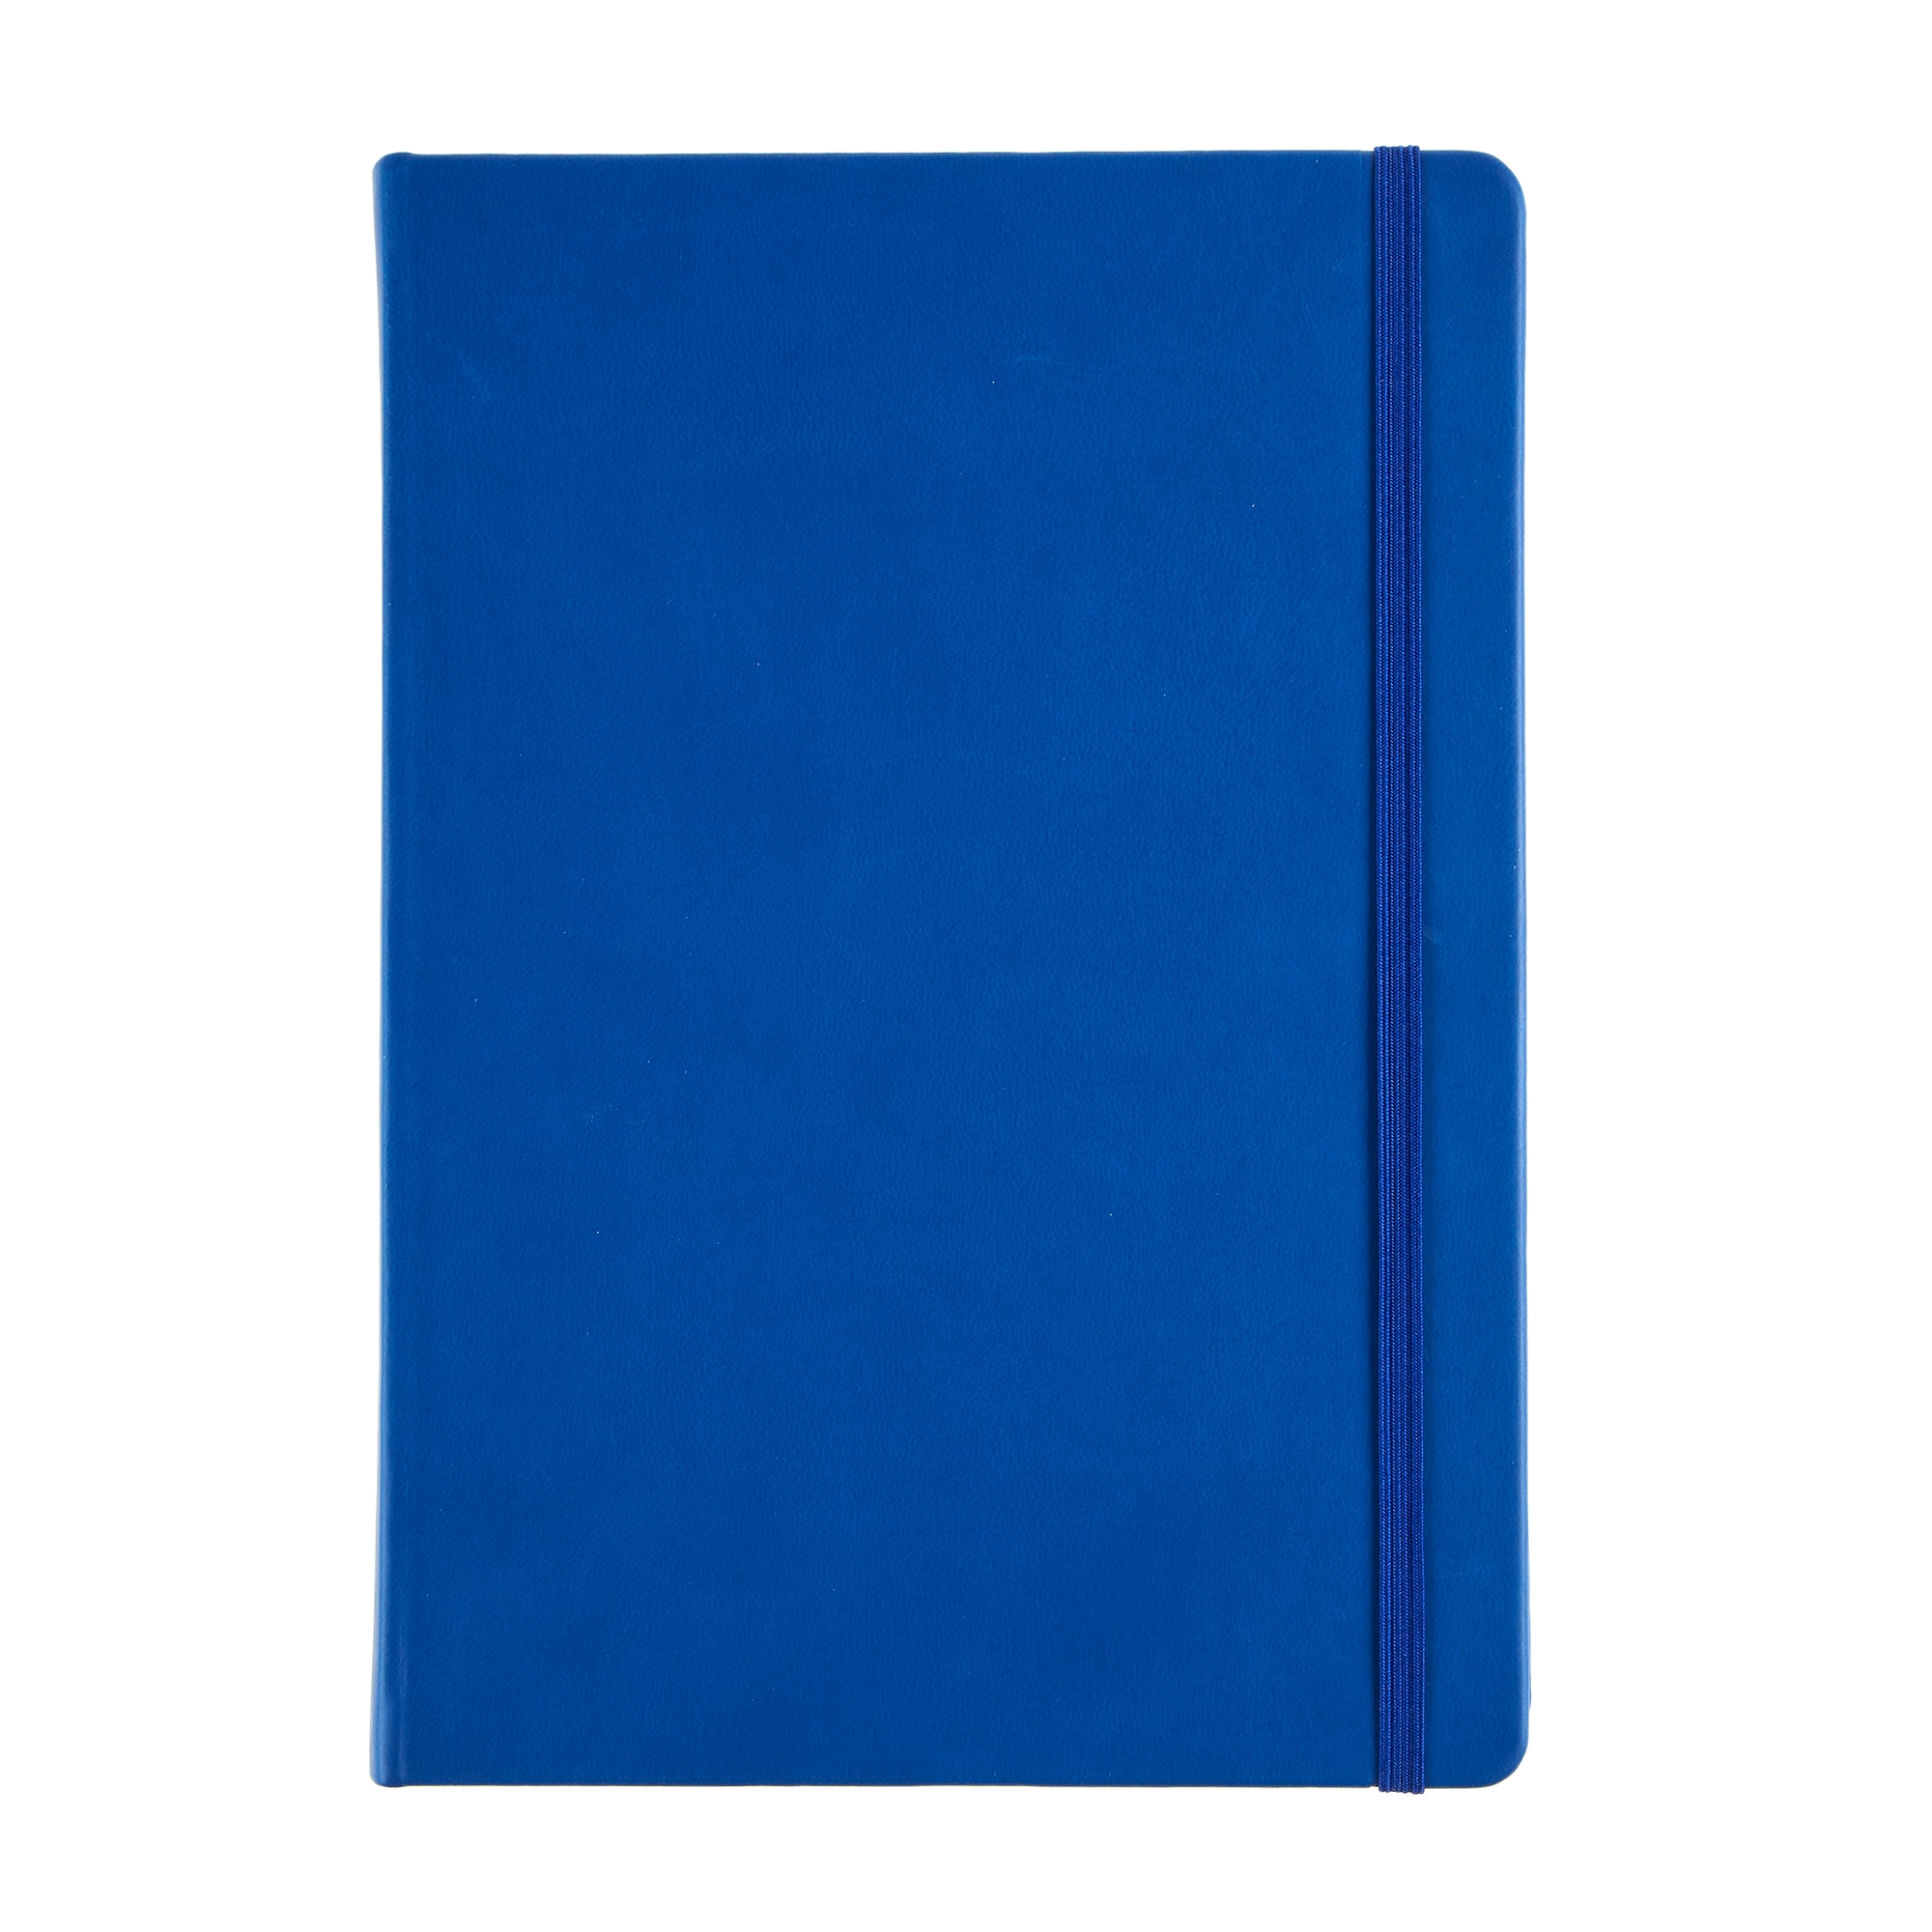 Collins A5 Hardback Notebook - Royal Blue